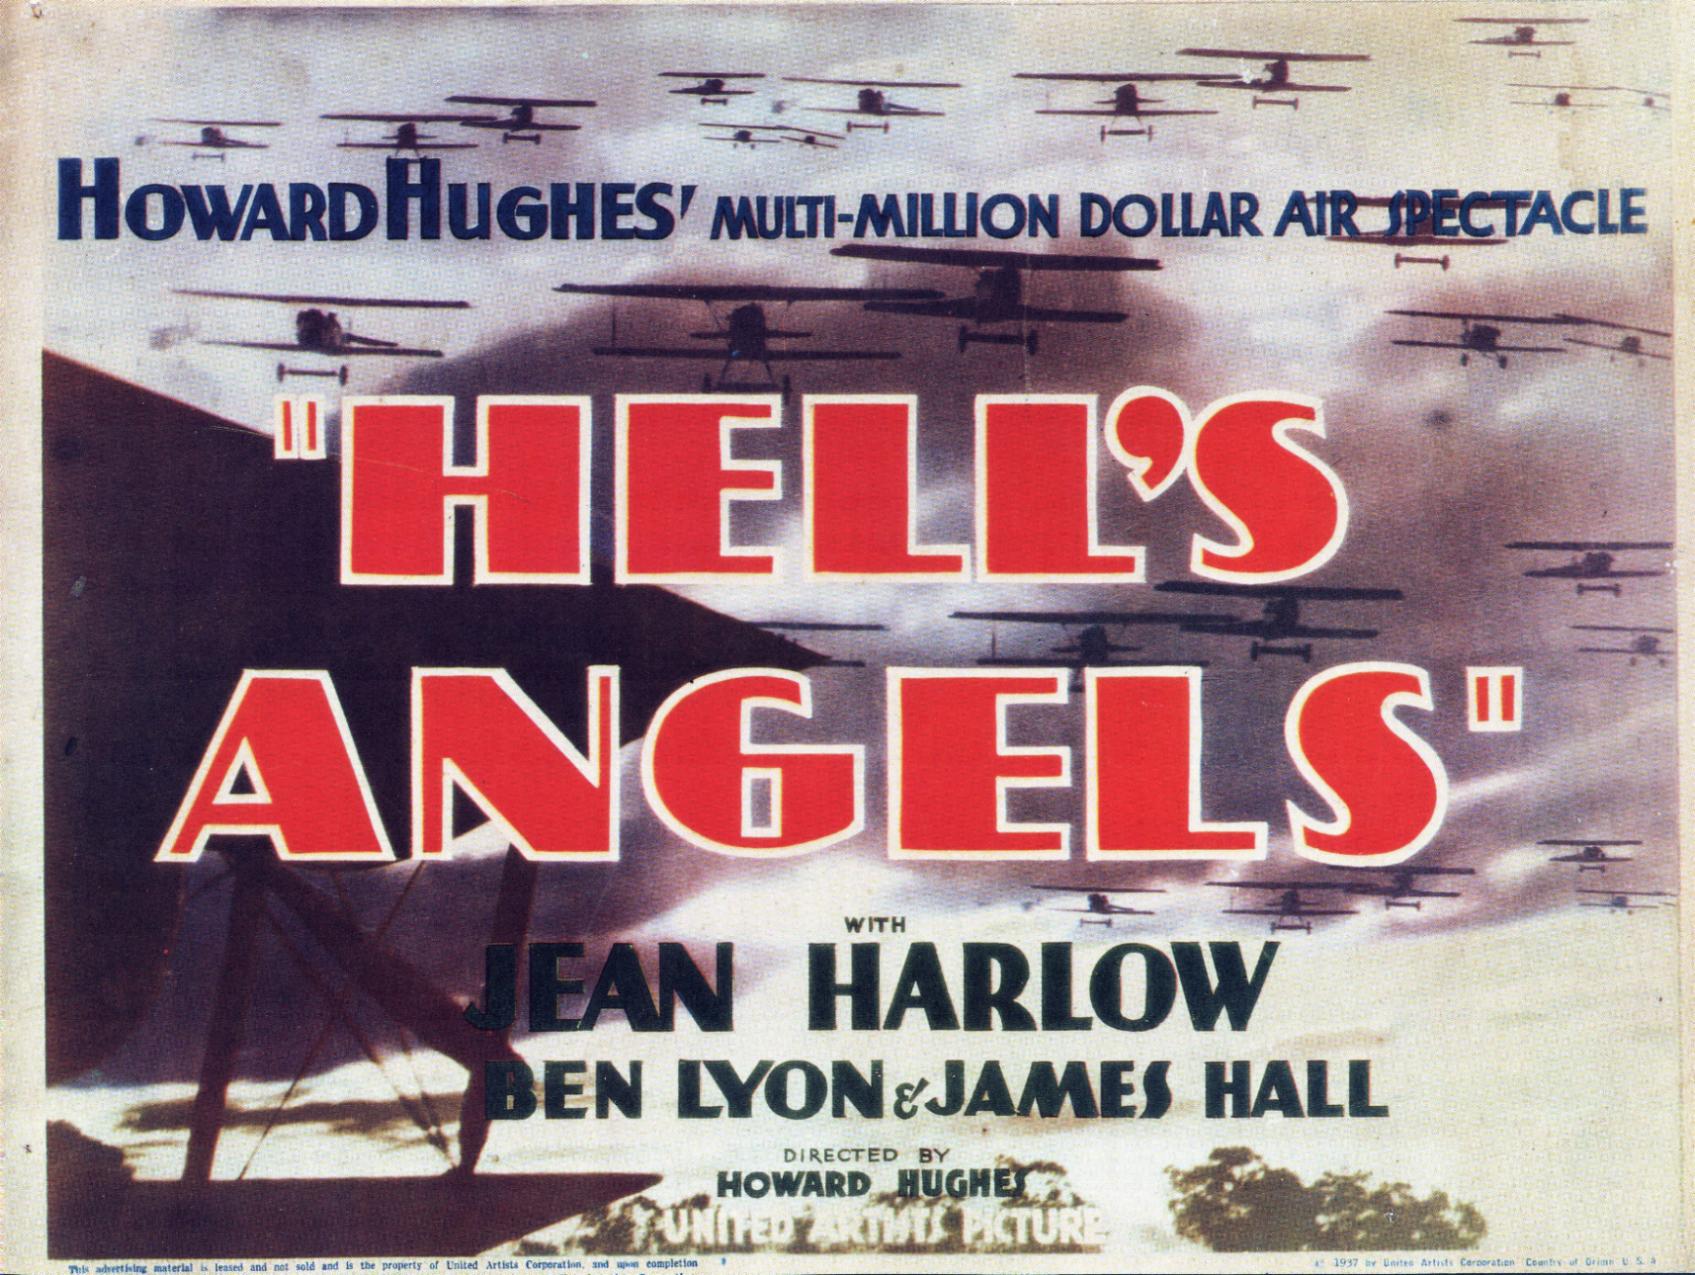 Howard Hughes aviation epic, Hell's Angels!